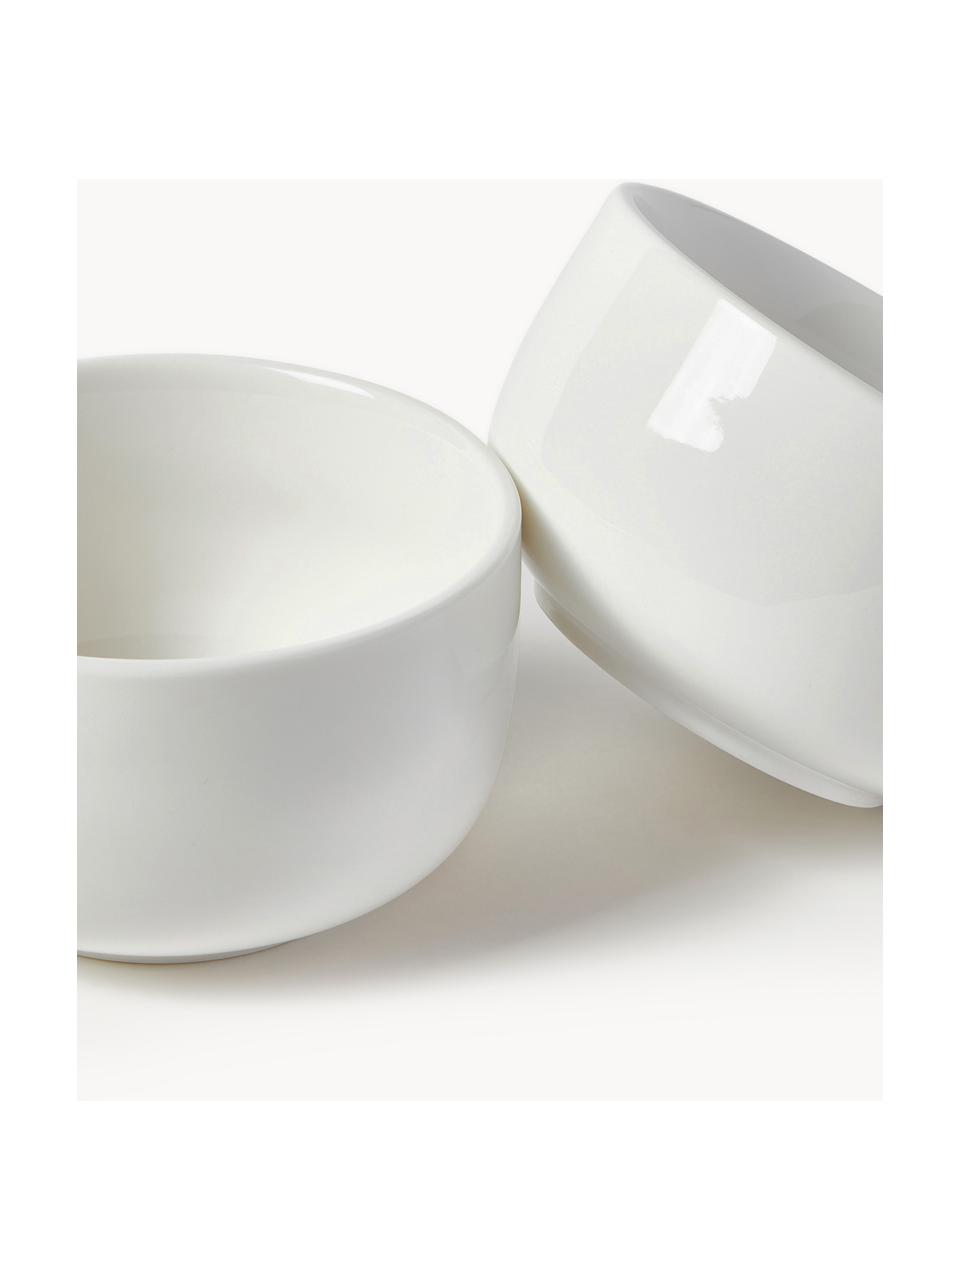 Ciotole per salse in porcellana Nessa 3 pz, Porcellana a pasta dura di alta qualità smaltata, Bianco latte lucido, Ø 11 x Alt. 6 cm